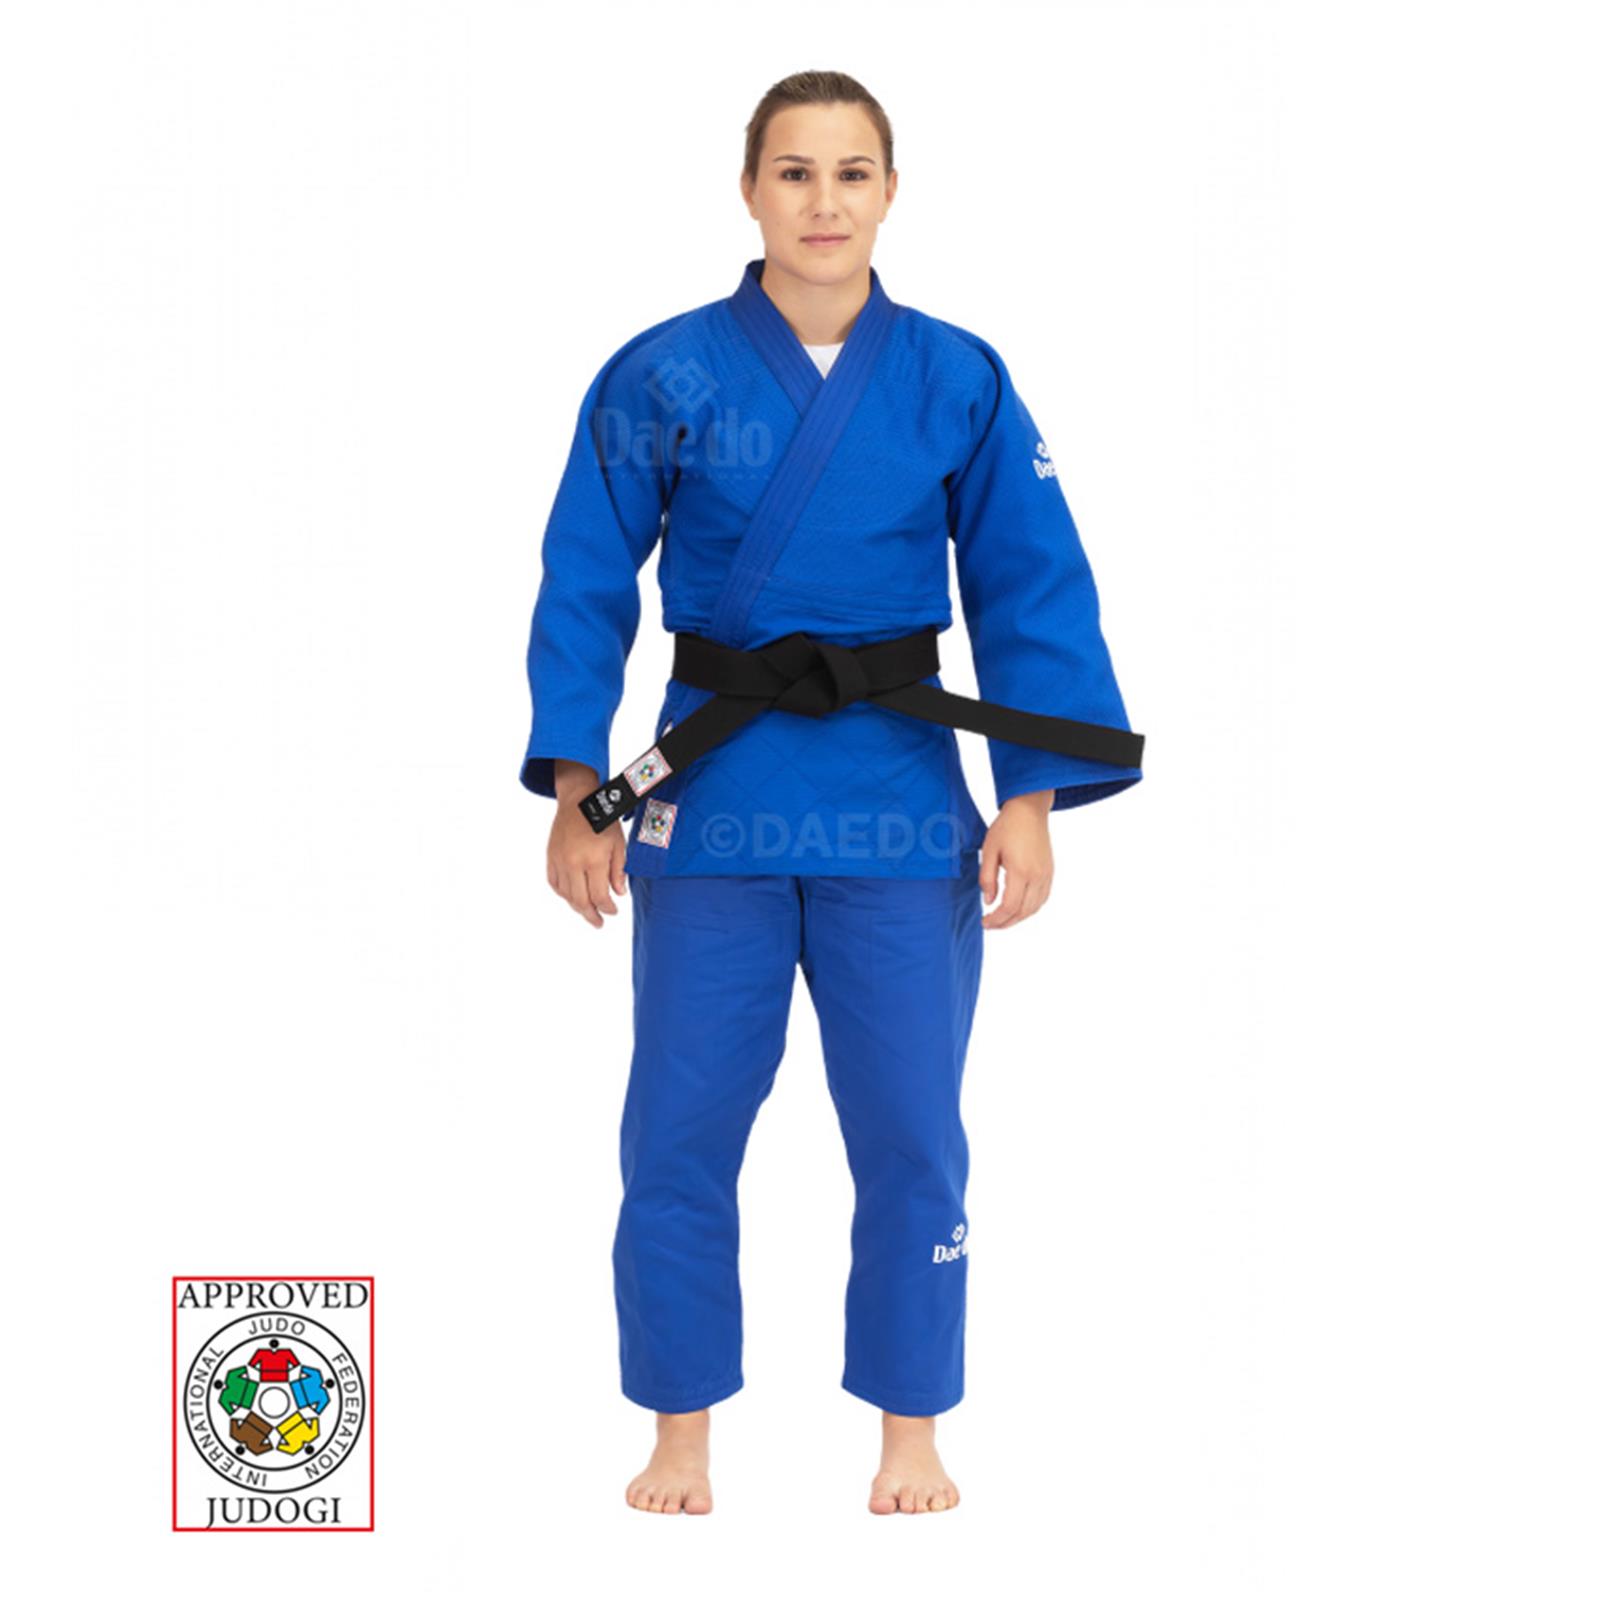 Dae Do Judogi da Competizione Blu Omologato IJF (5° - 180cm - BLU)